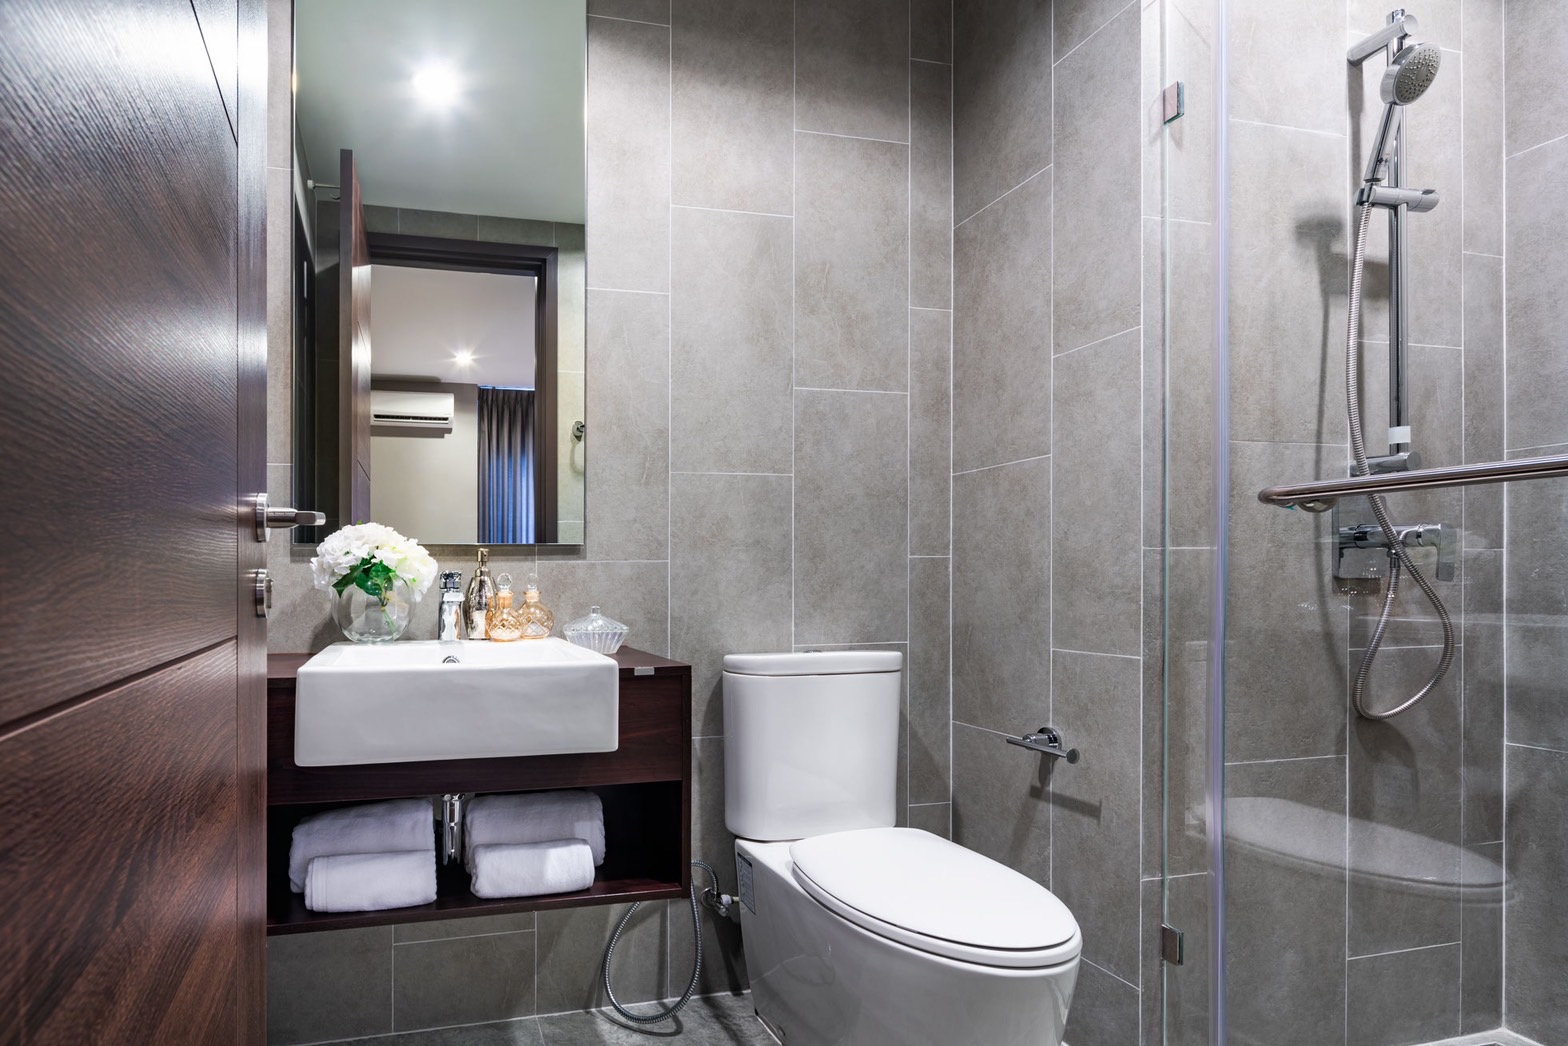 2 Bedroom, 2 Bathroom 70 sqm size at C Ekkamai For Rent 50,000THB